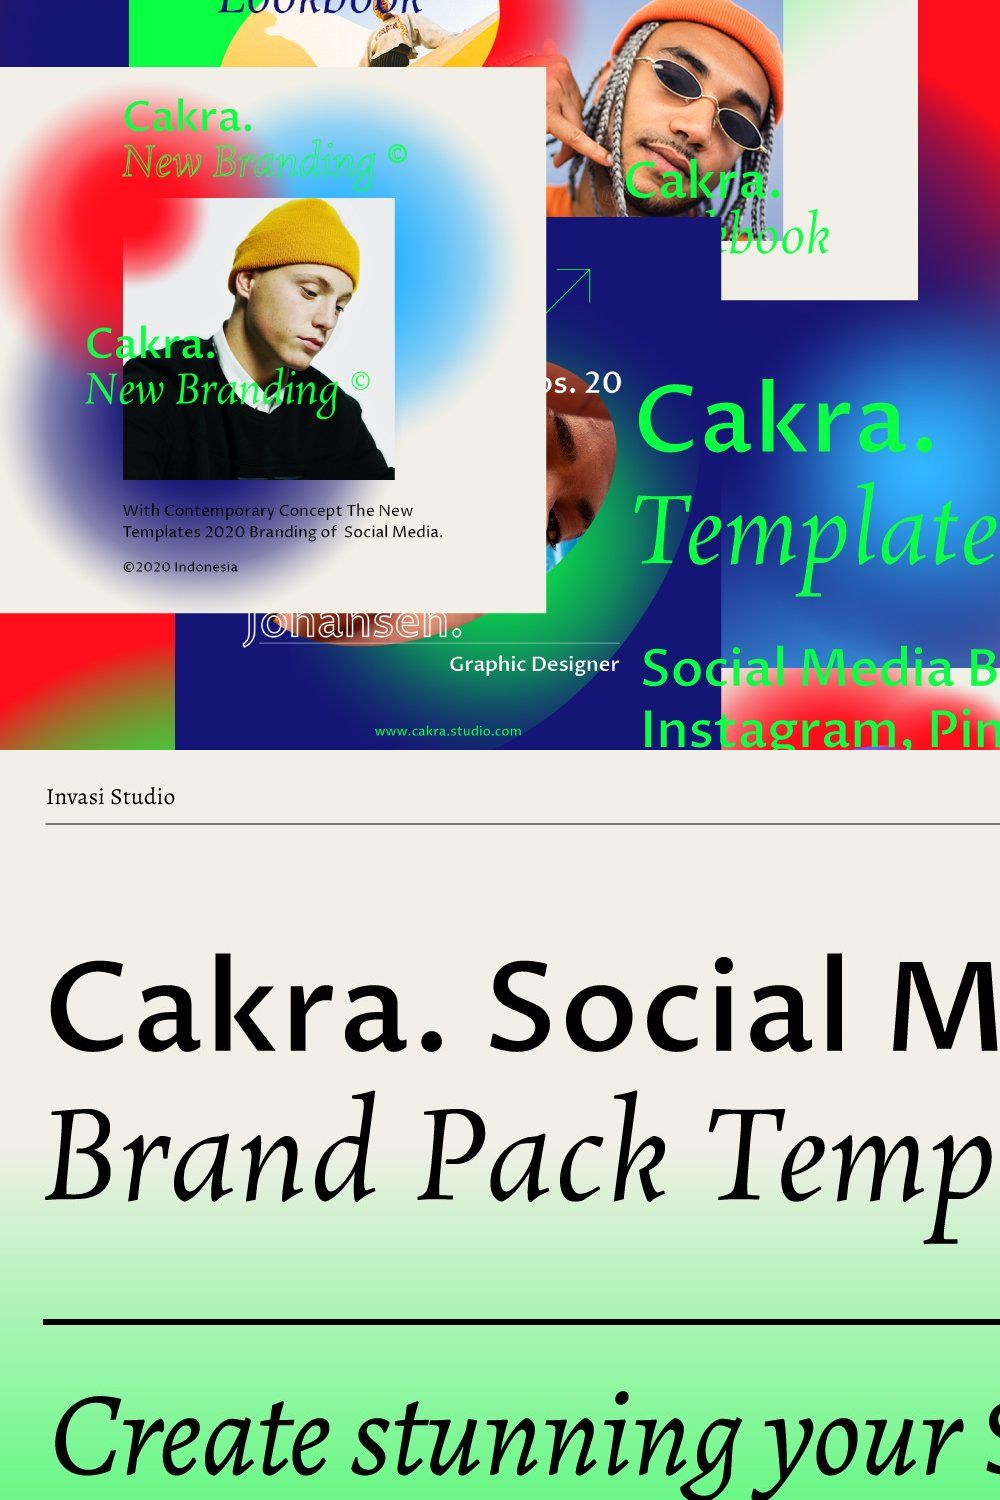 CAKRA - Social Media Kit Templates pinterest preview image.